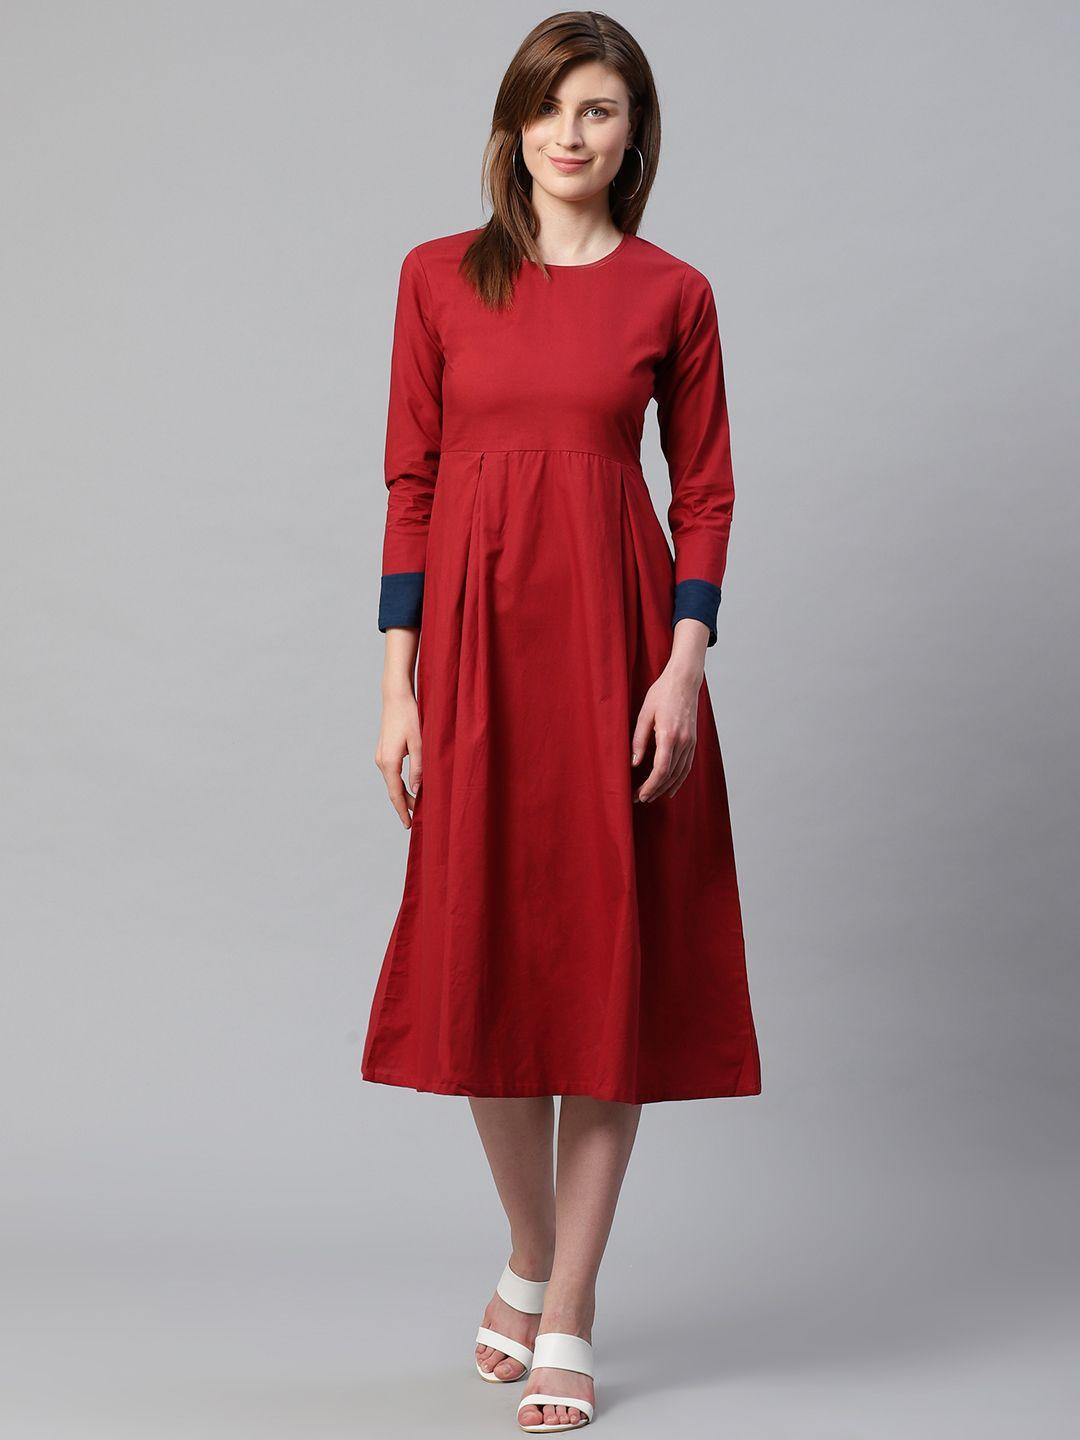 varushka women red solid a-line dress